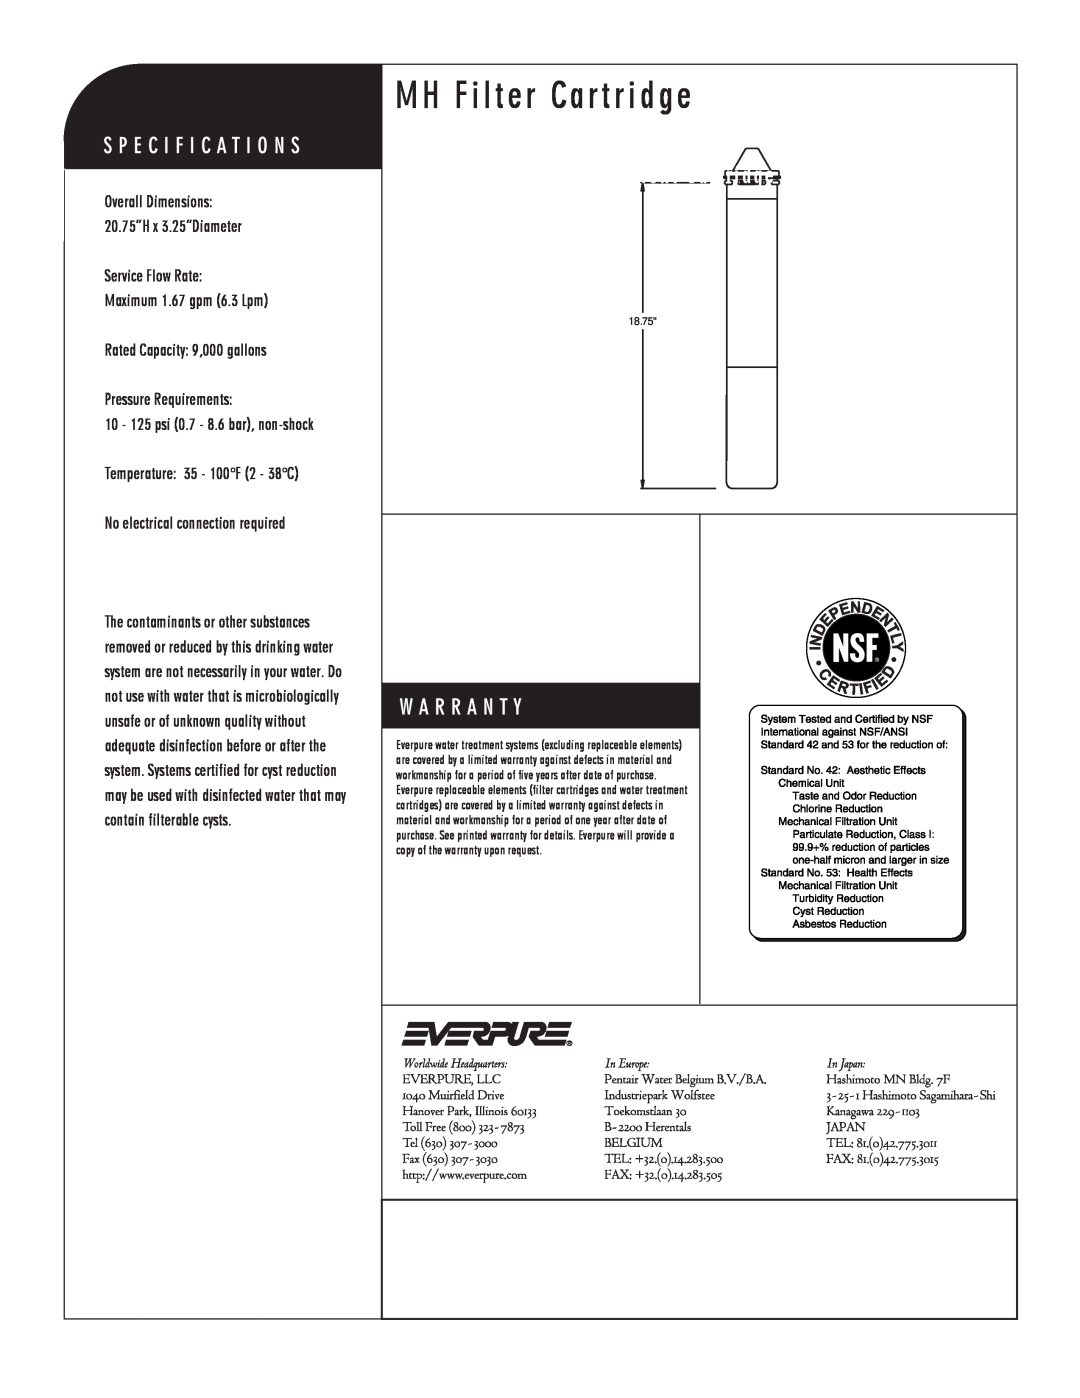 Everpure EV9613-01 manual MH Filter Cartridge, MH Precoat Replacement Cartridge, Service Flow Rate Maximum 1.67 gpm 6.3 Lpm 